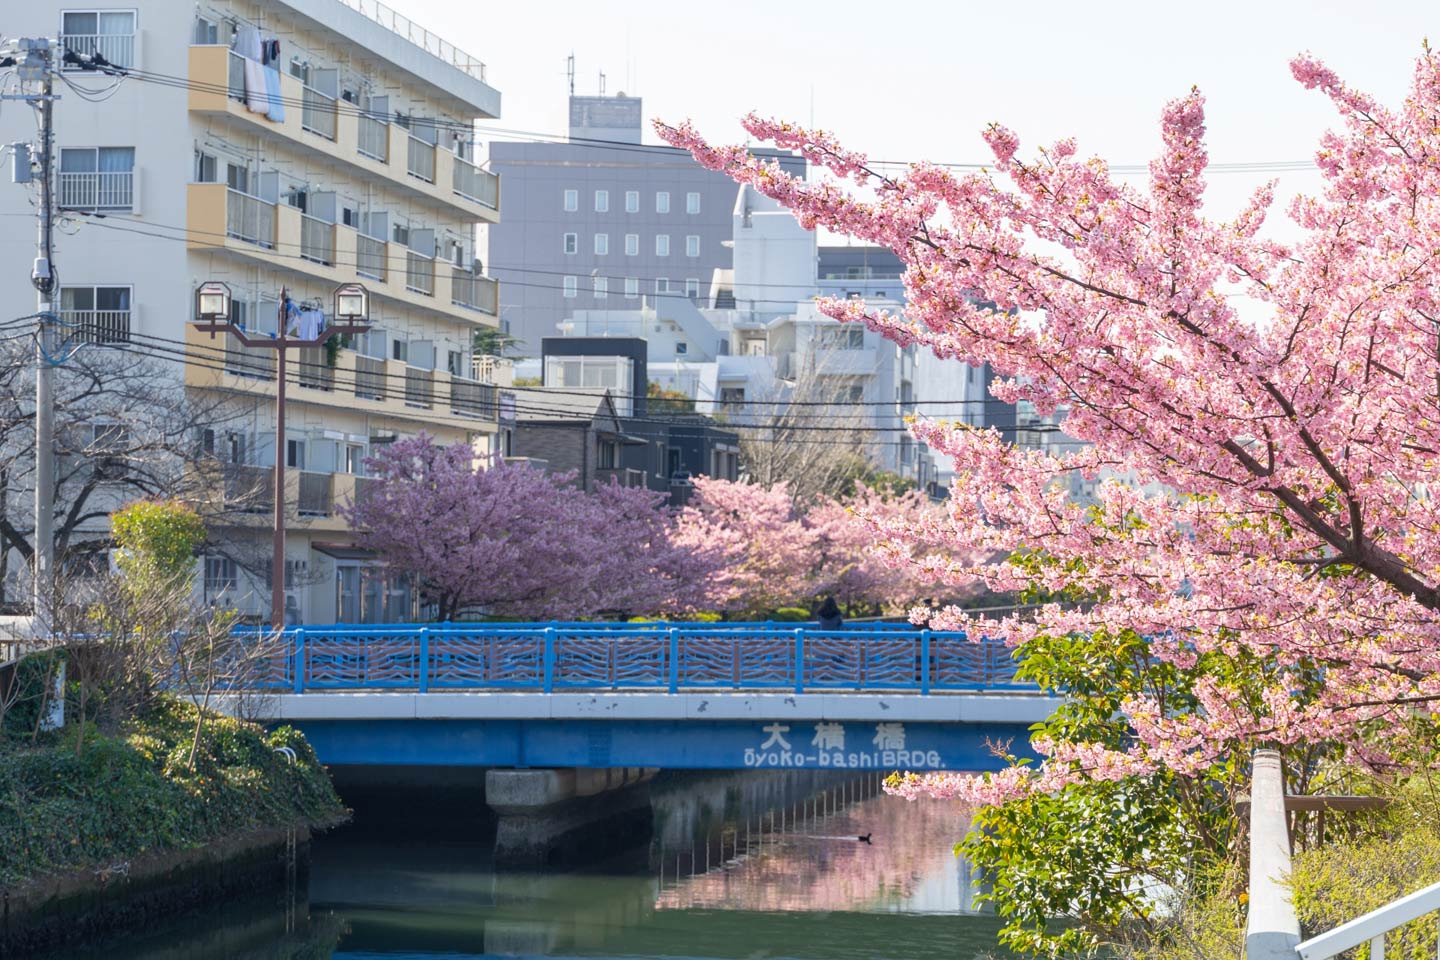 7 Best Hidden Spots to See Sakura Cherry Blossoms in and around Tokyo